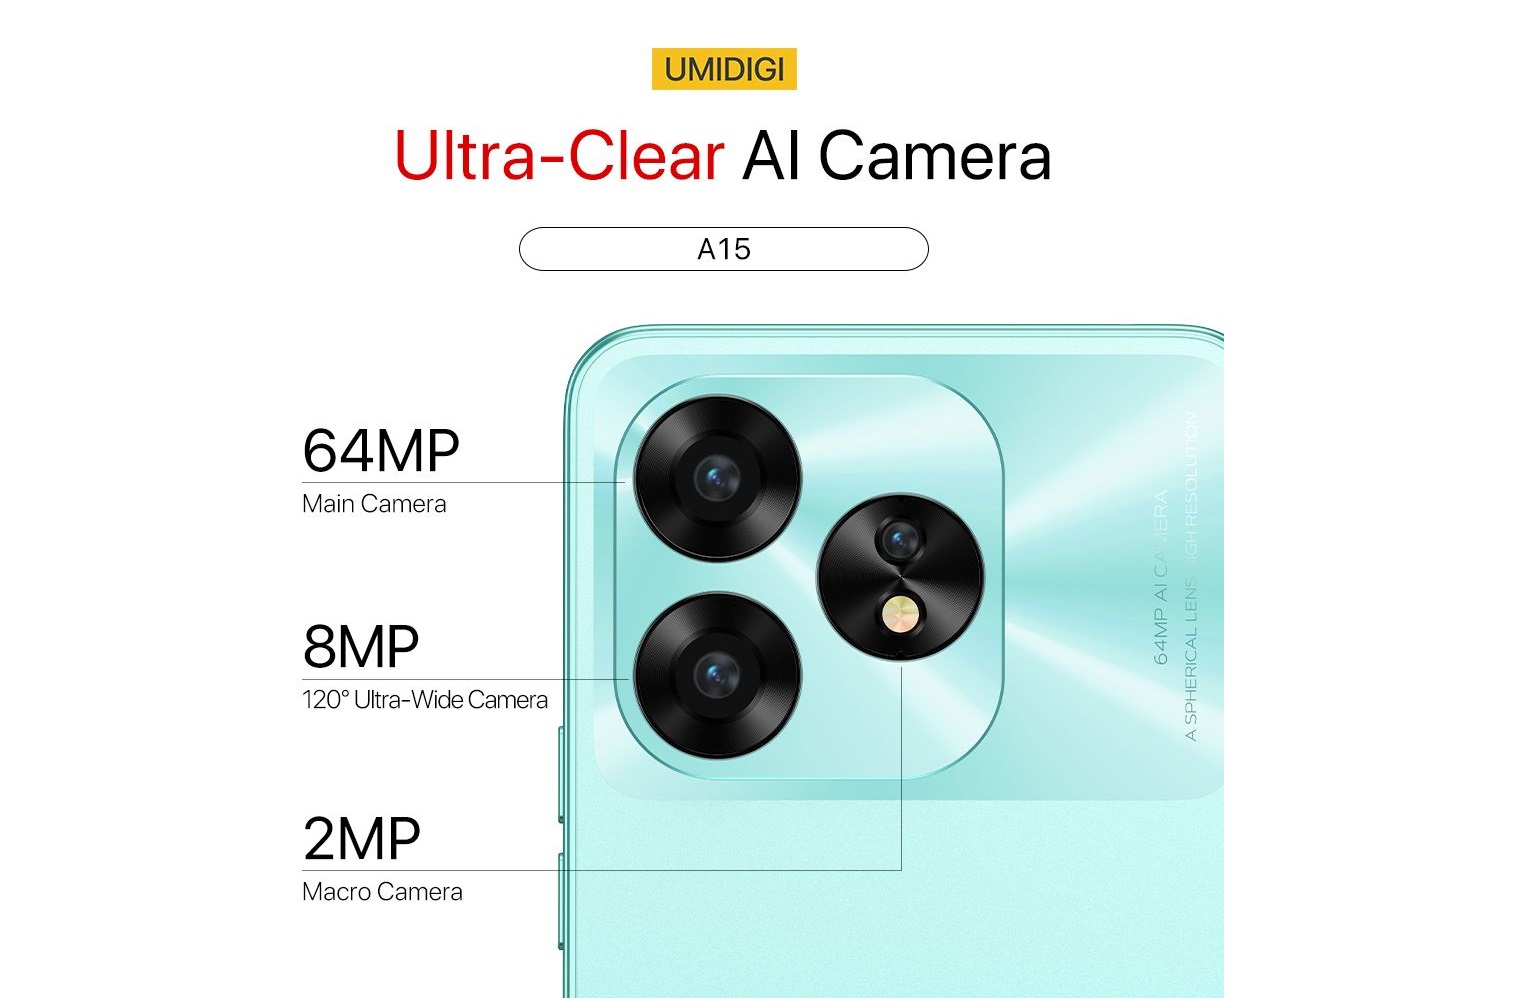 UMIDIGI G5 Arrives with HD+ display, 50MP Main camera